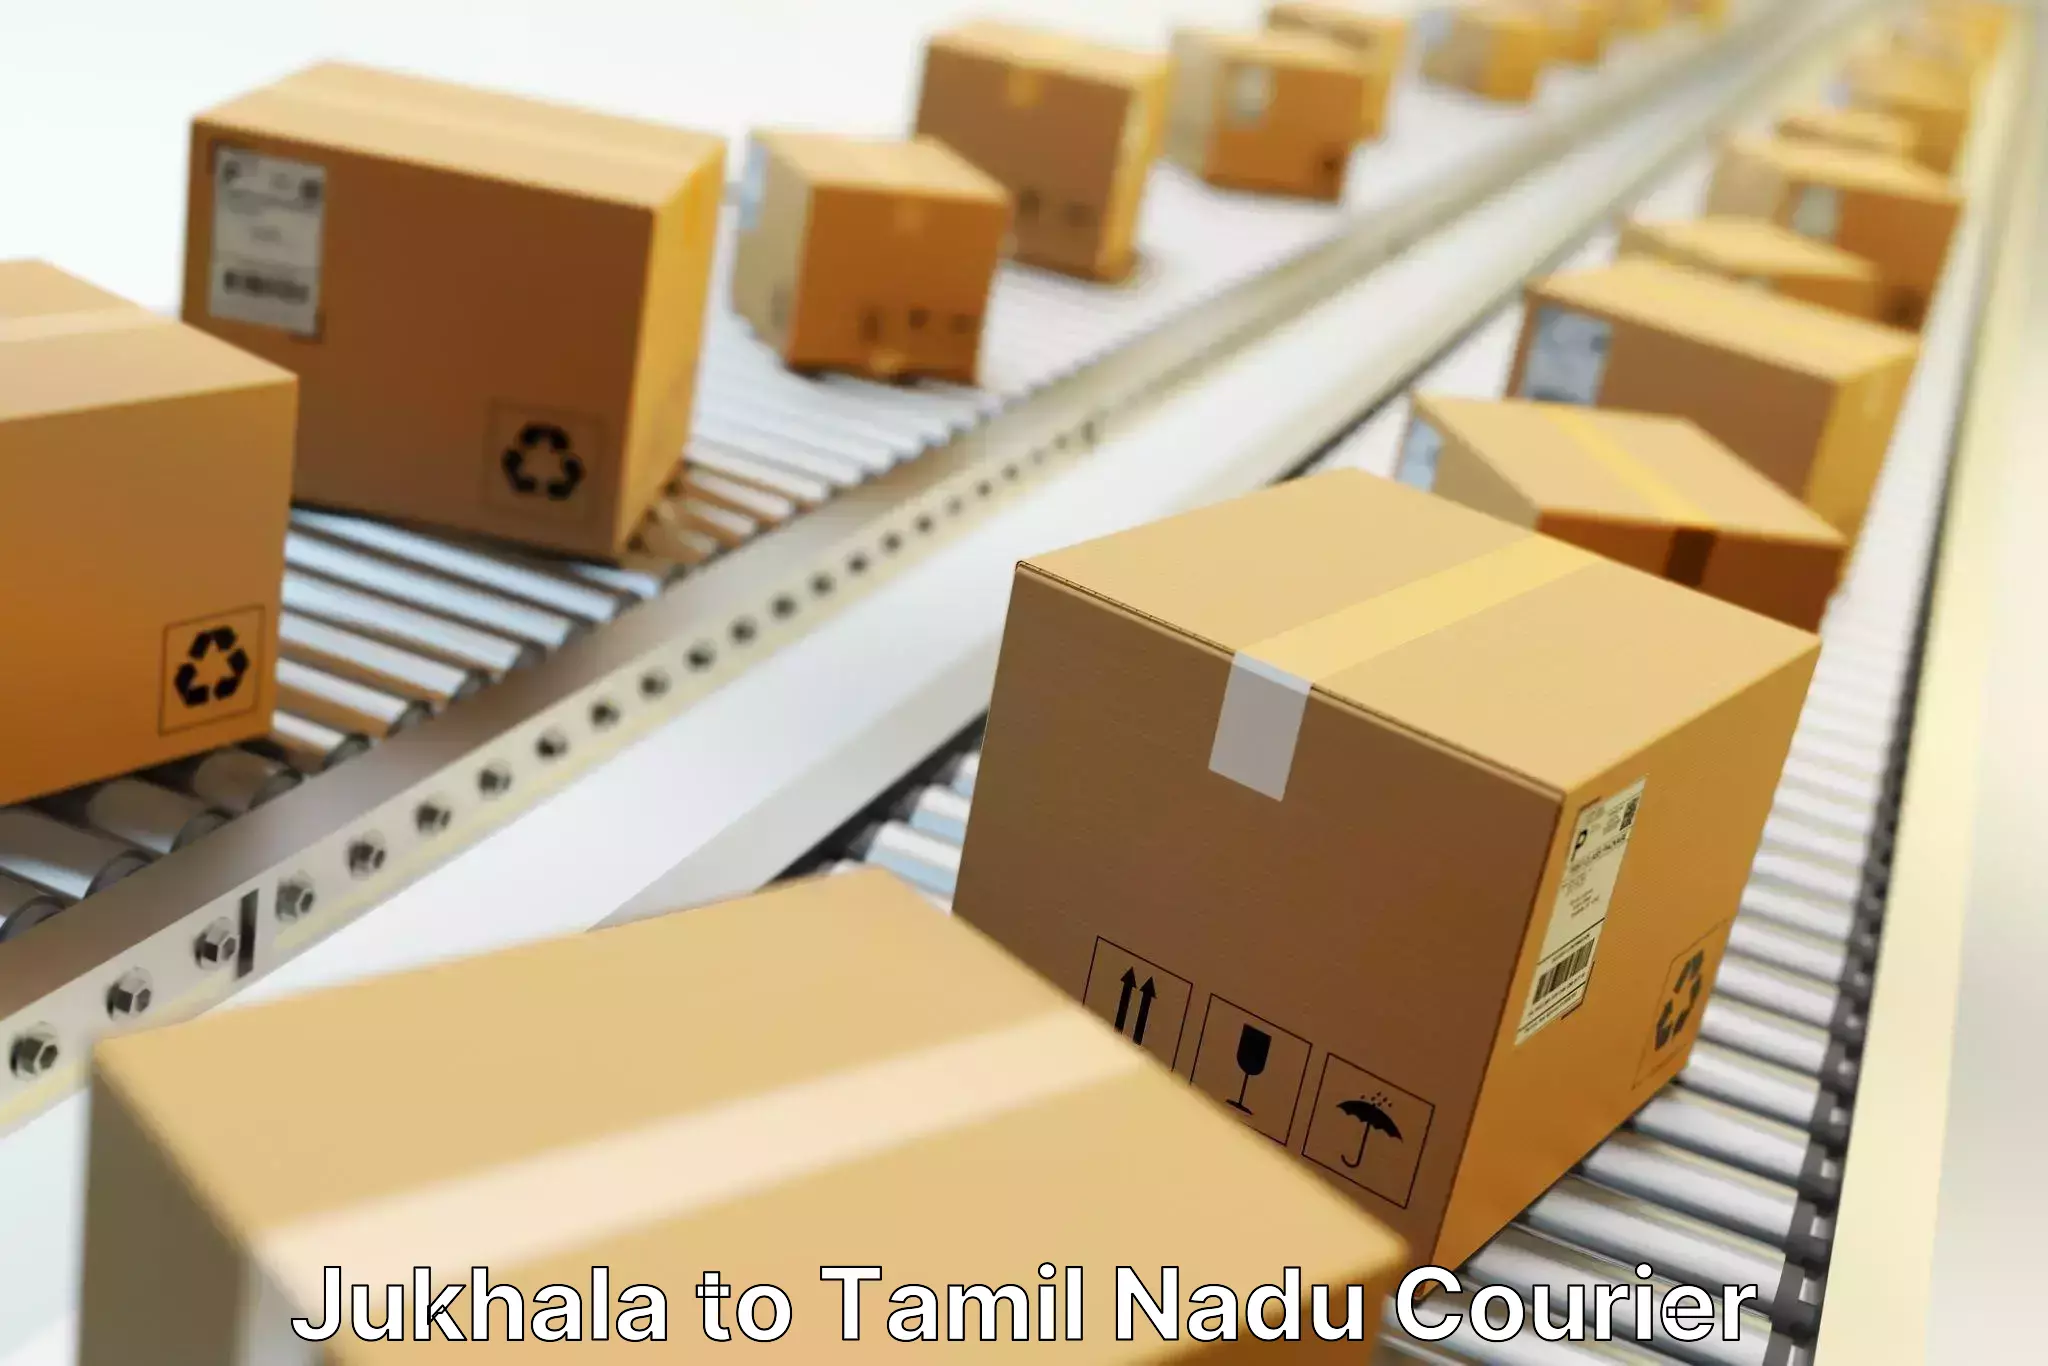 Pharmaceutical courier Jukhala to Tamil Nadu